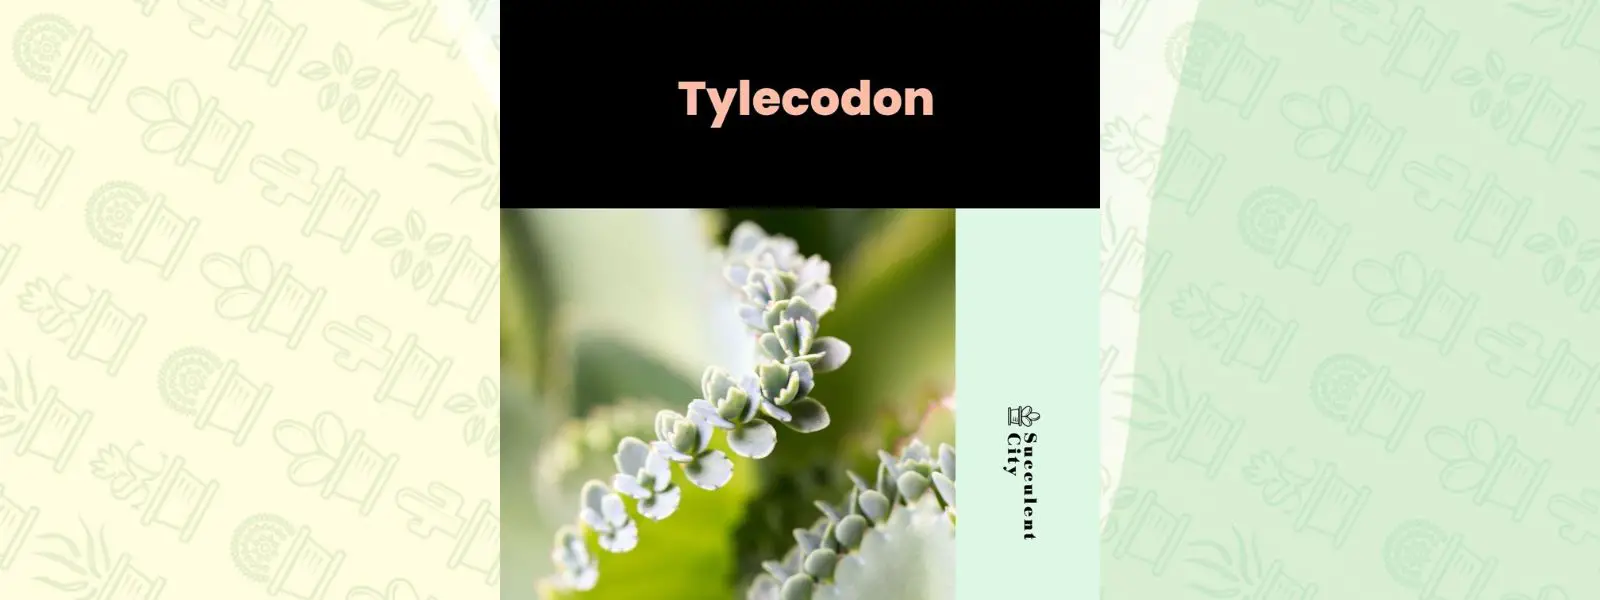 Género “Tylecodon”.